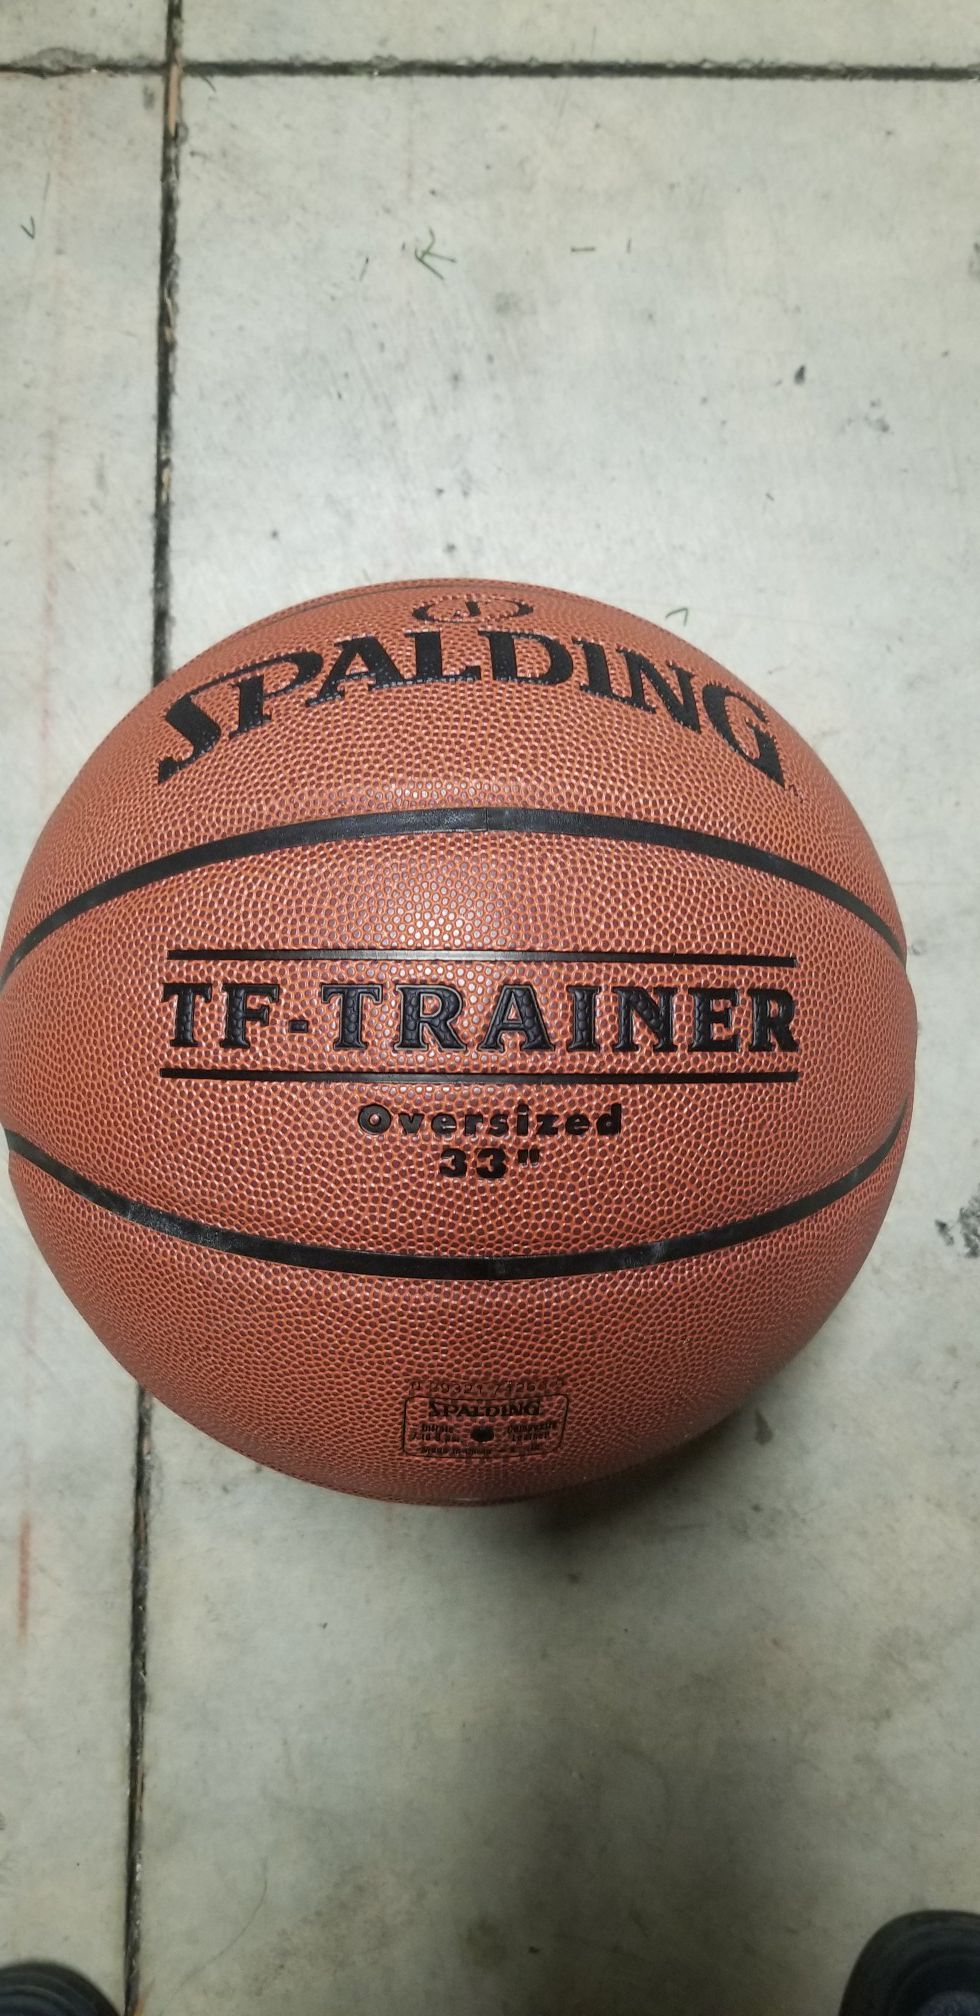 Spalding trainer basketball